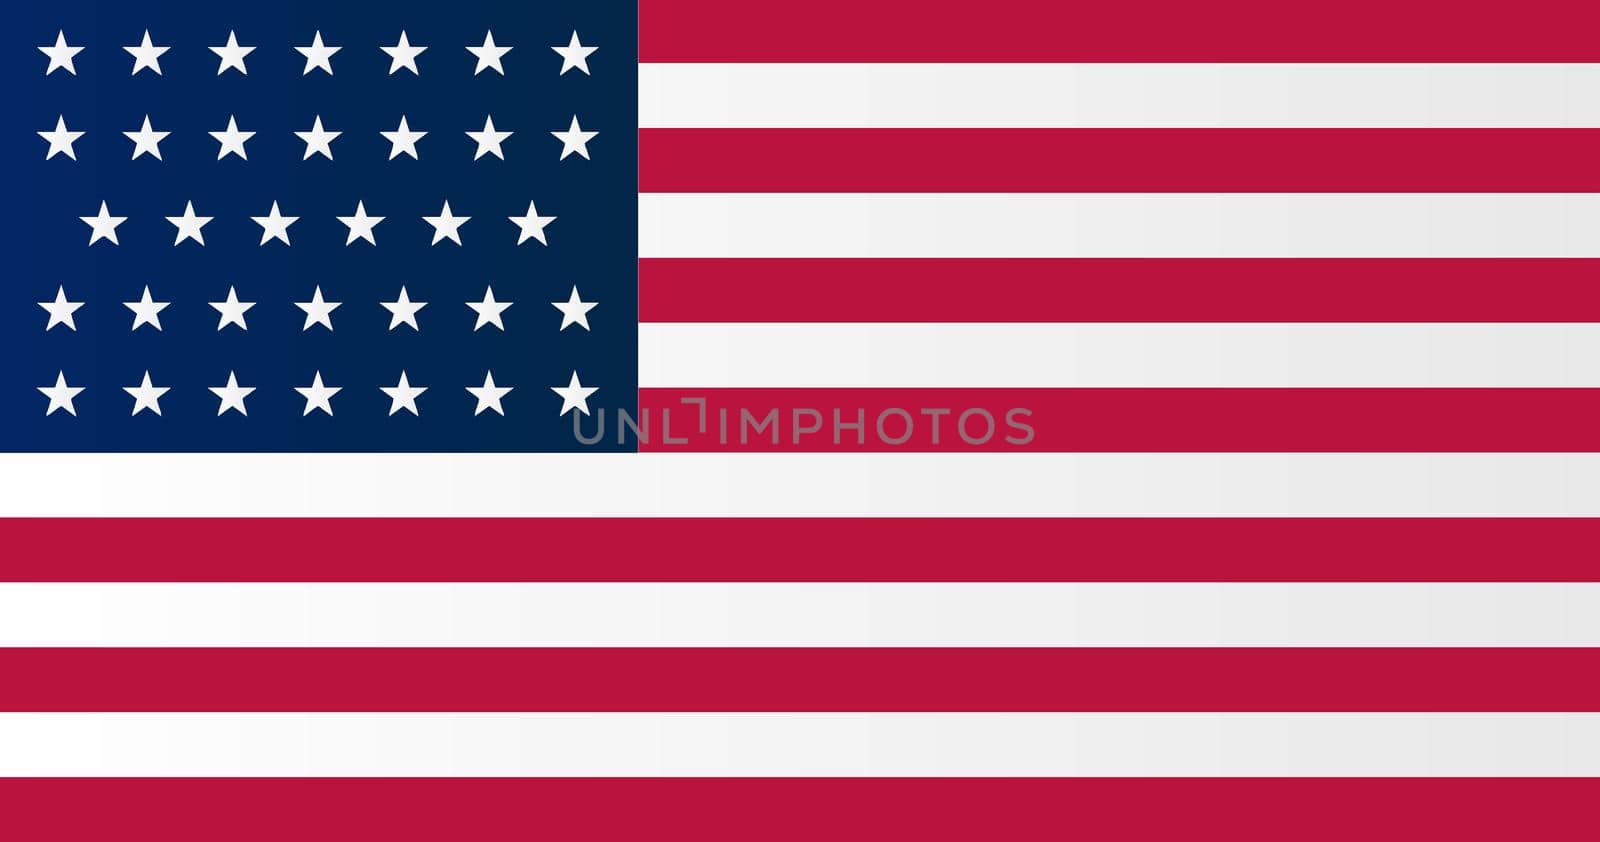 A Union side civil war stars and stripes flag